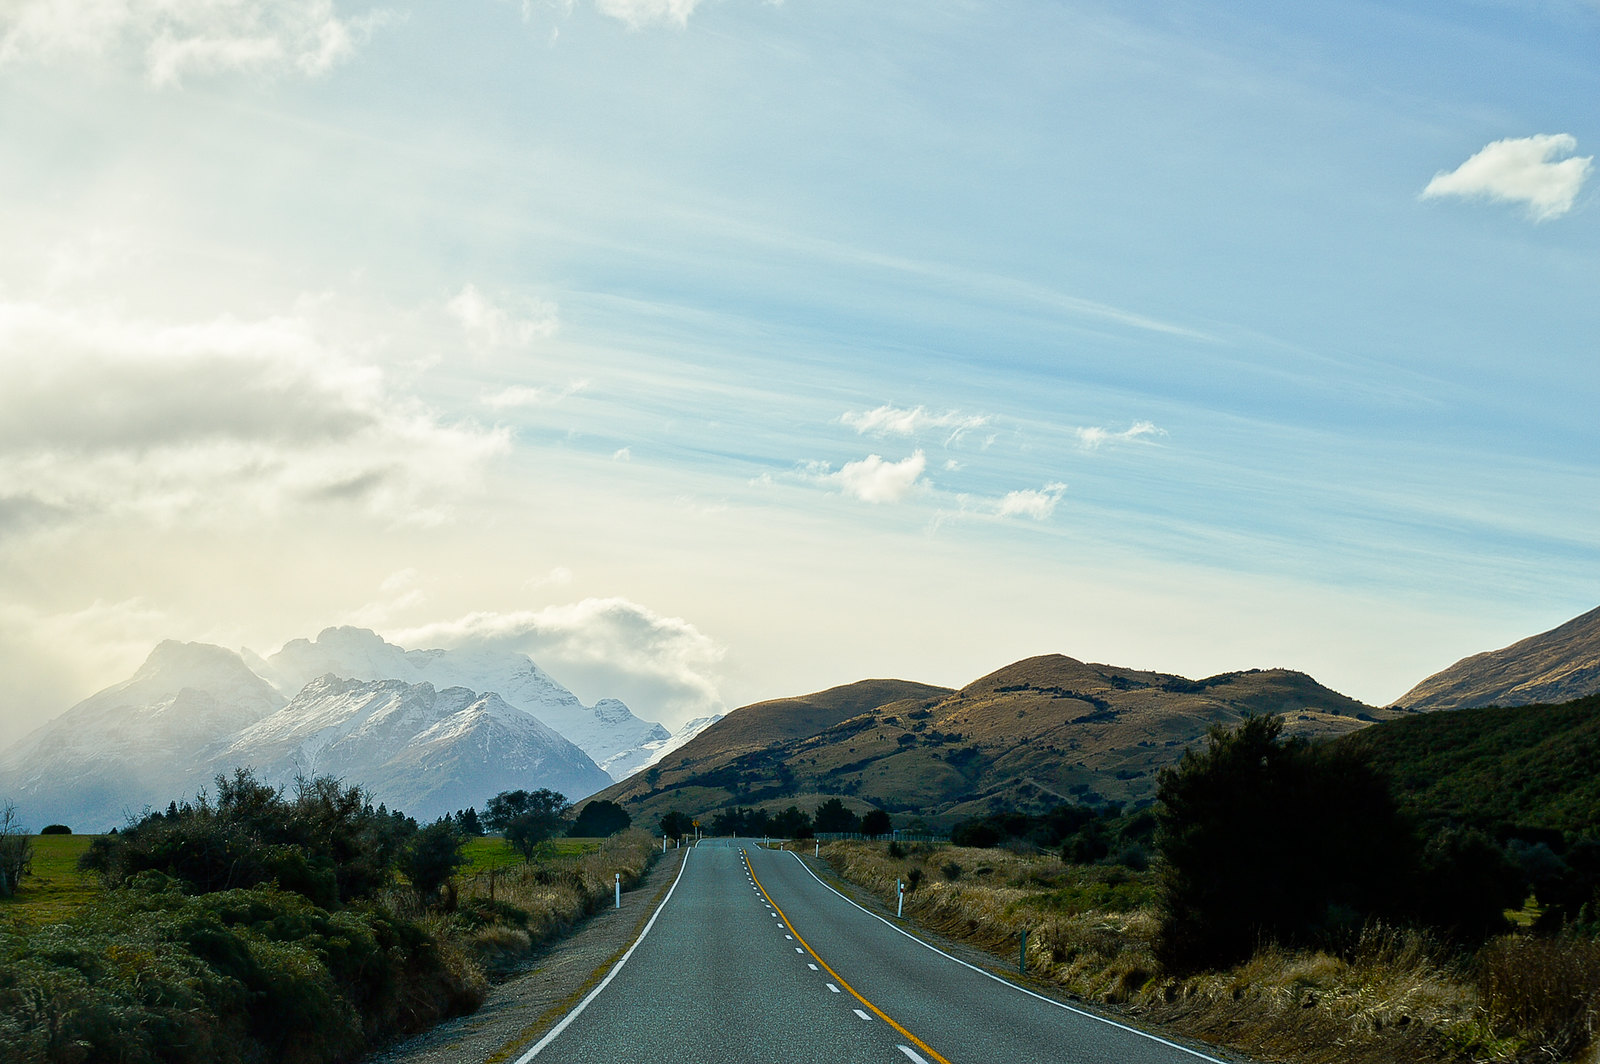 Journey to Glenorchy, New Zealand